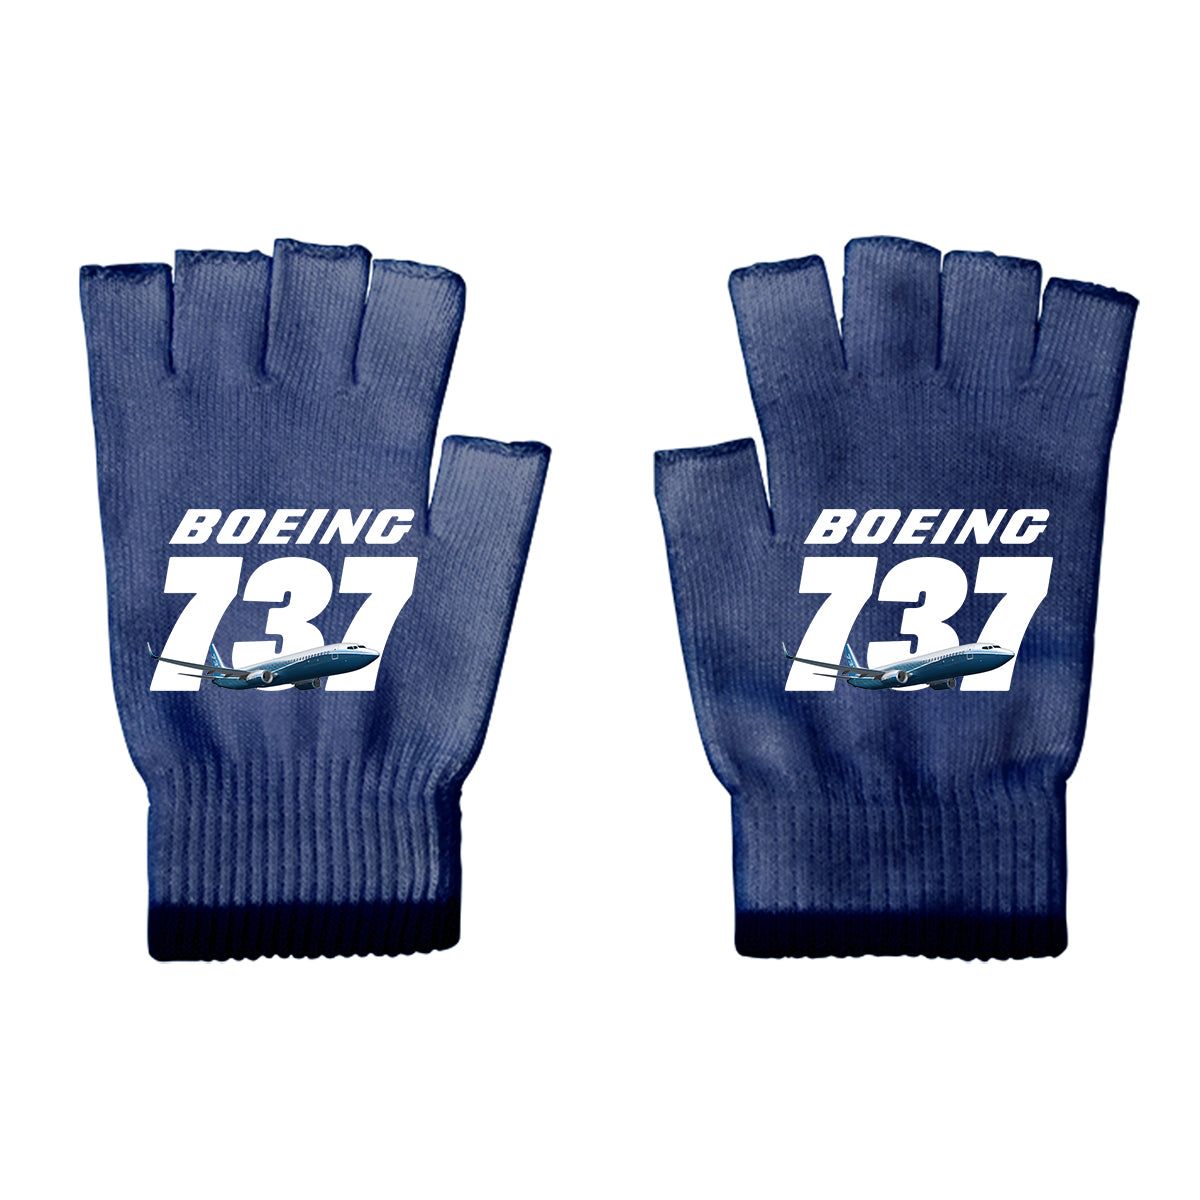 Super Boeing 737+Text Designed Cut Gloves